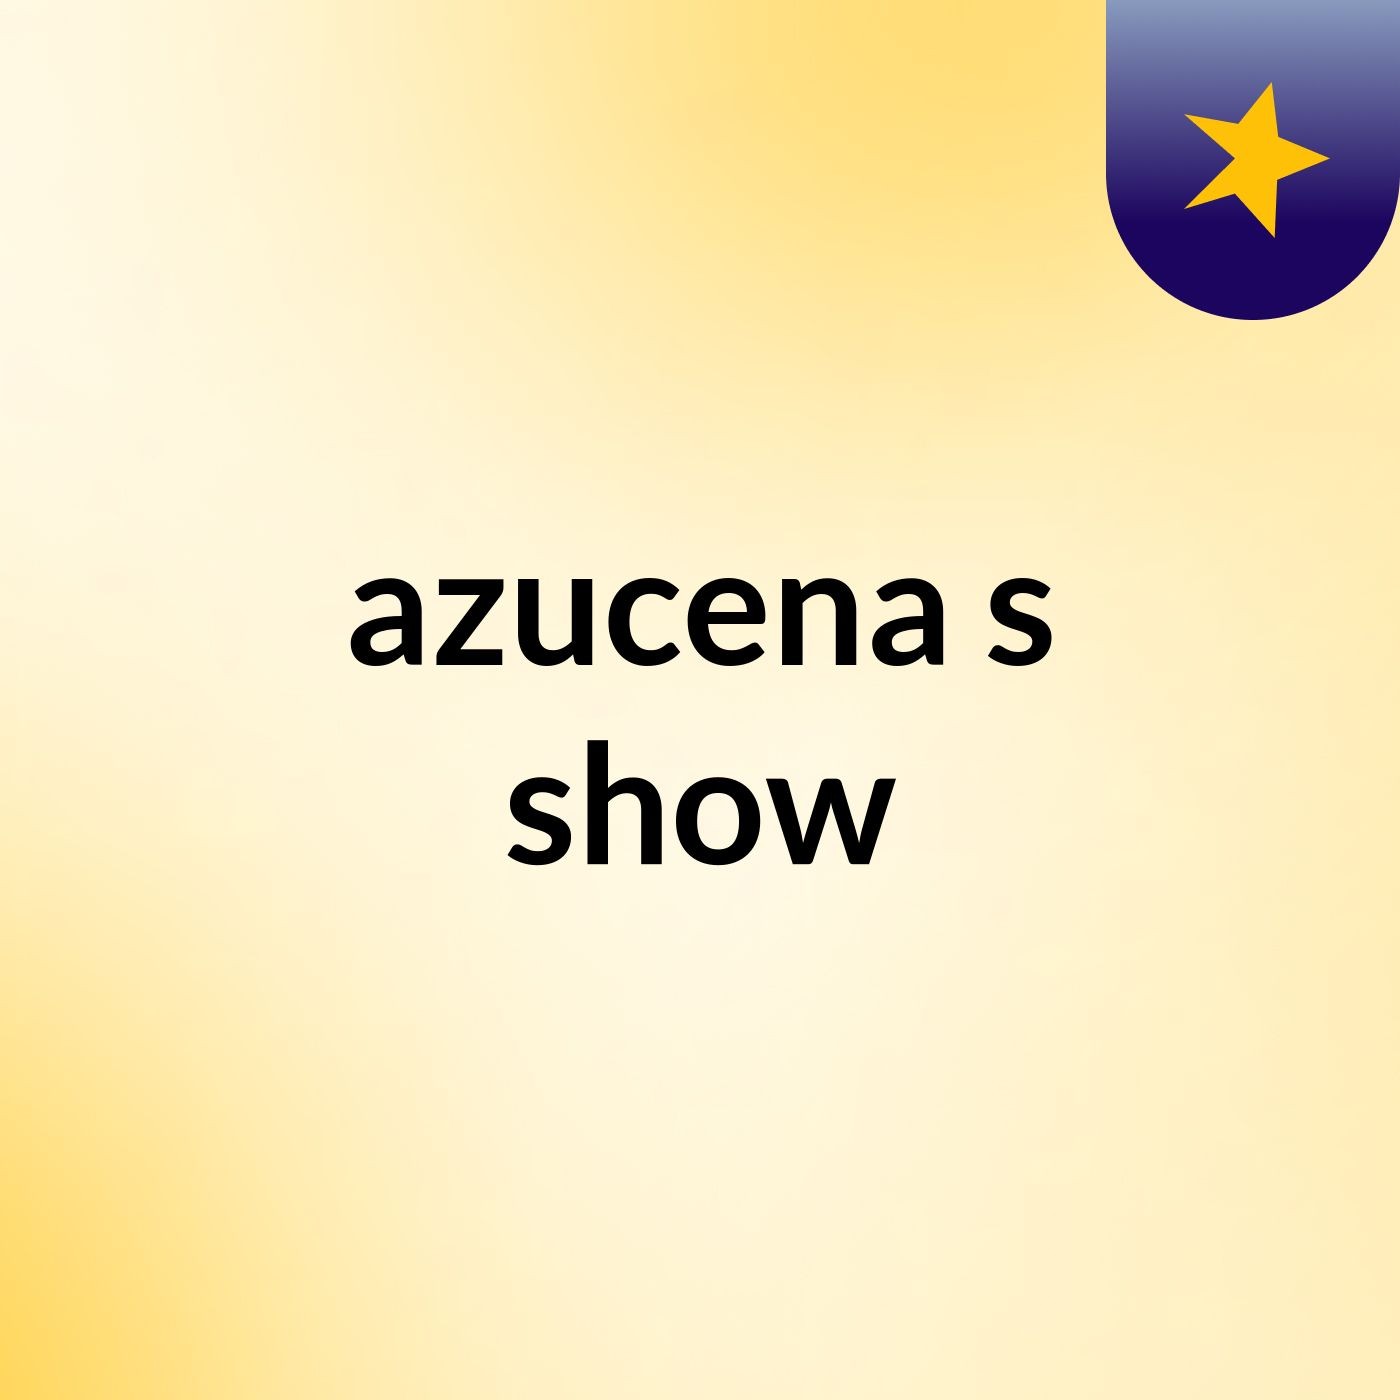 azucena's show